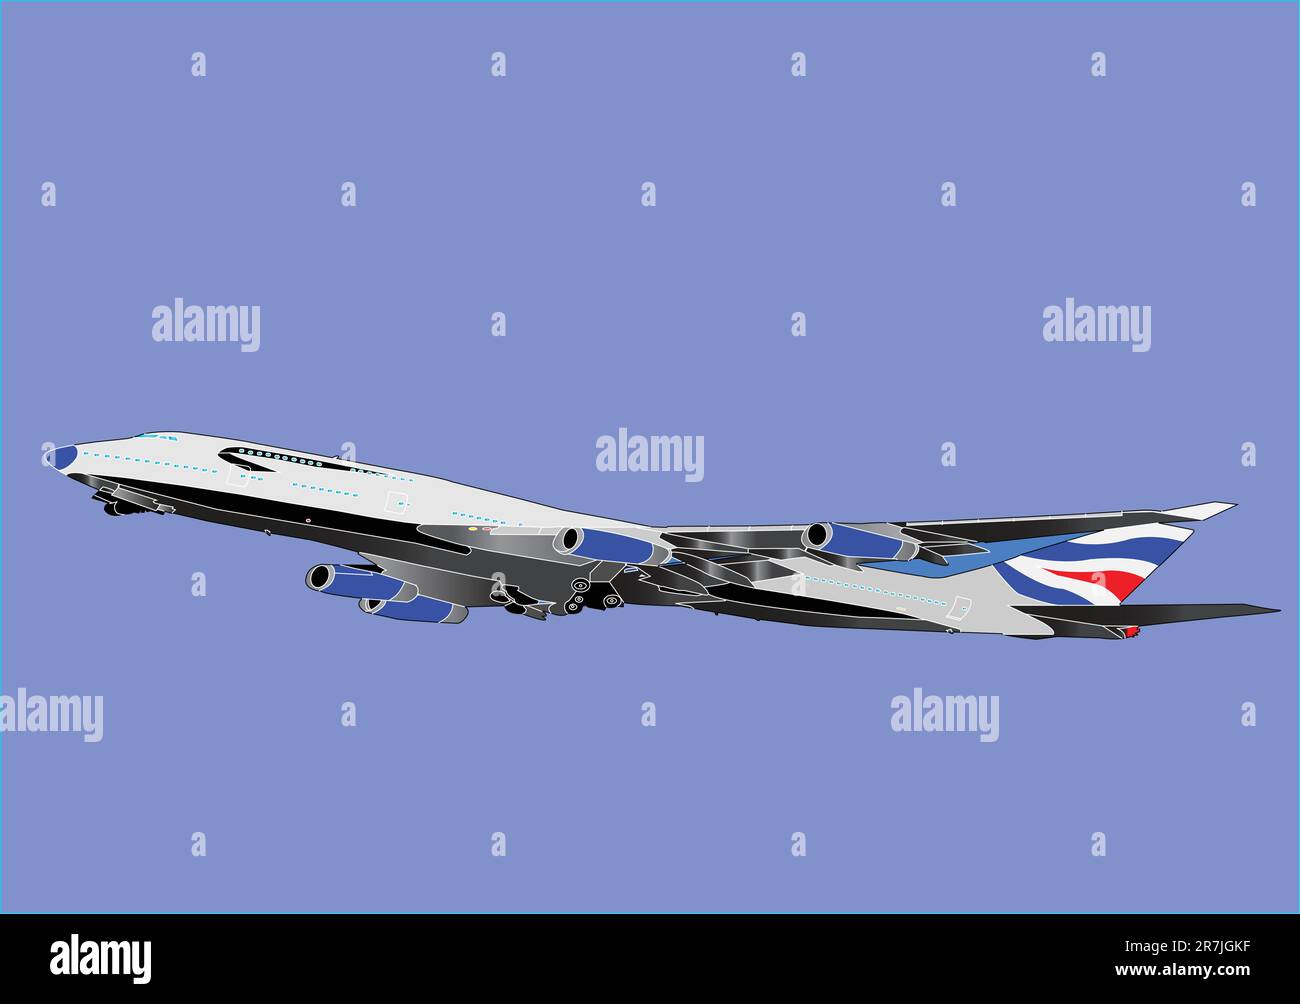 airplane illustration - vector Stock Vector